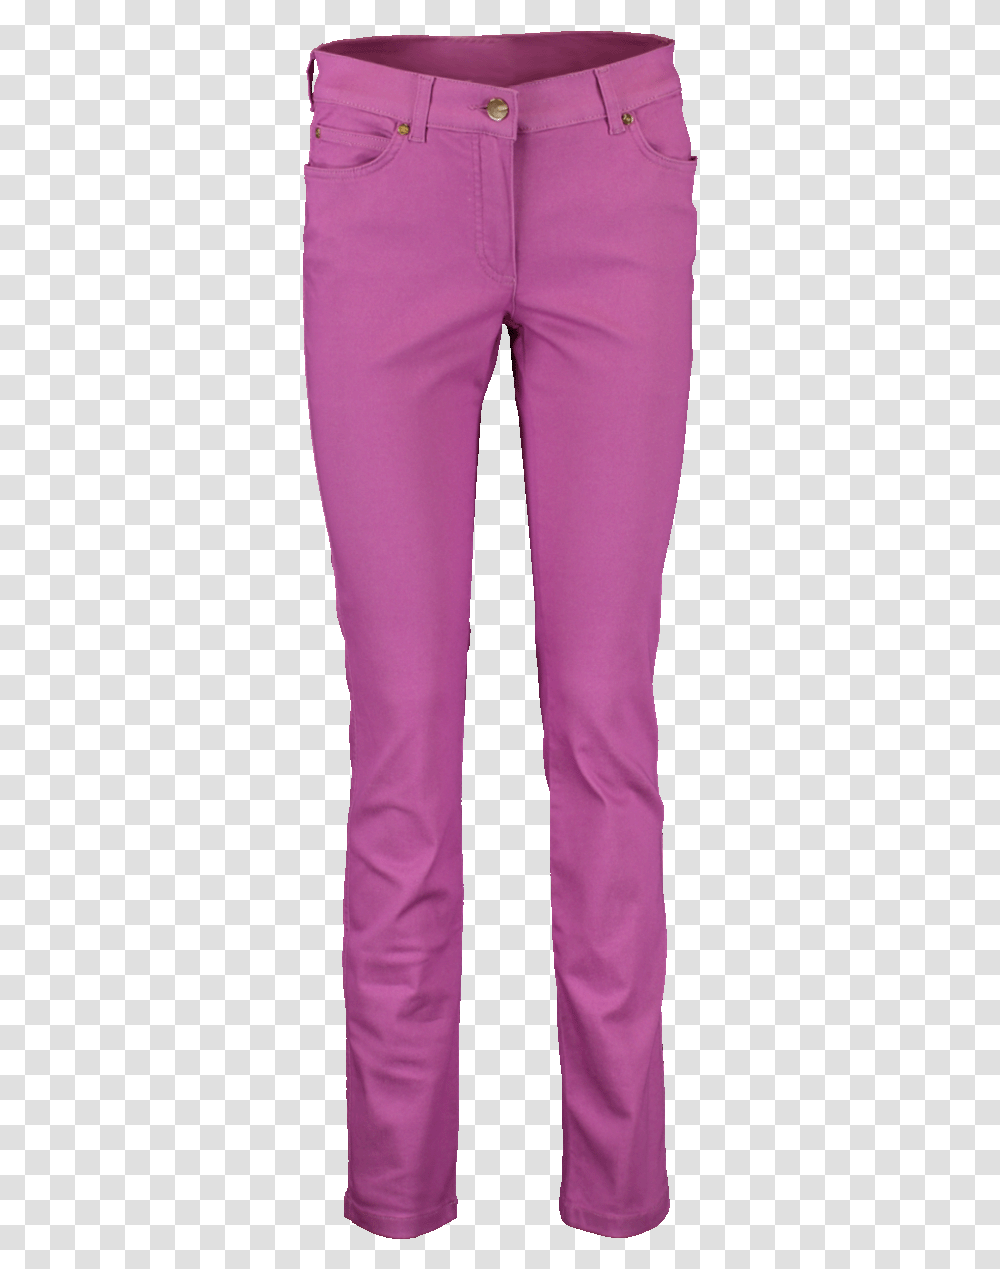 Satin, Pants, Purple, Tights Transparent Png